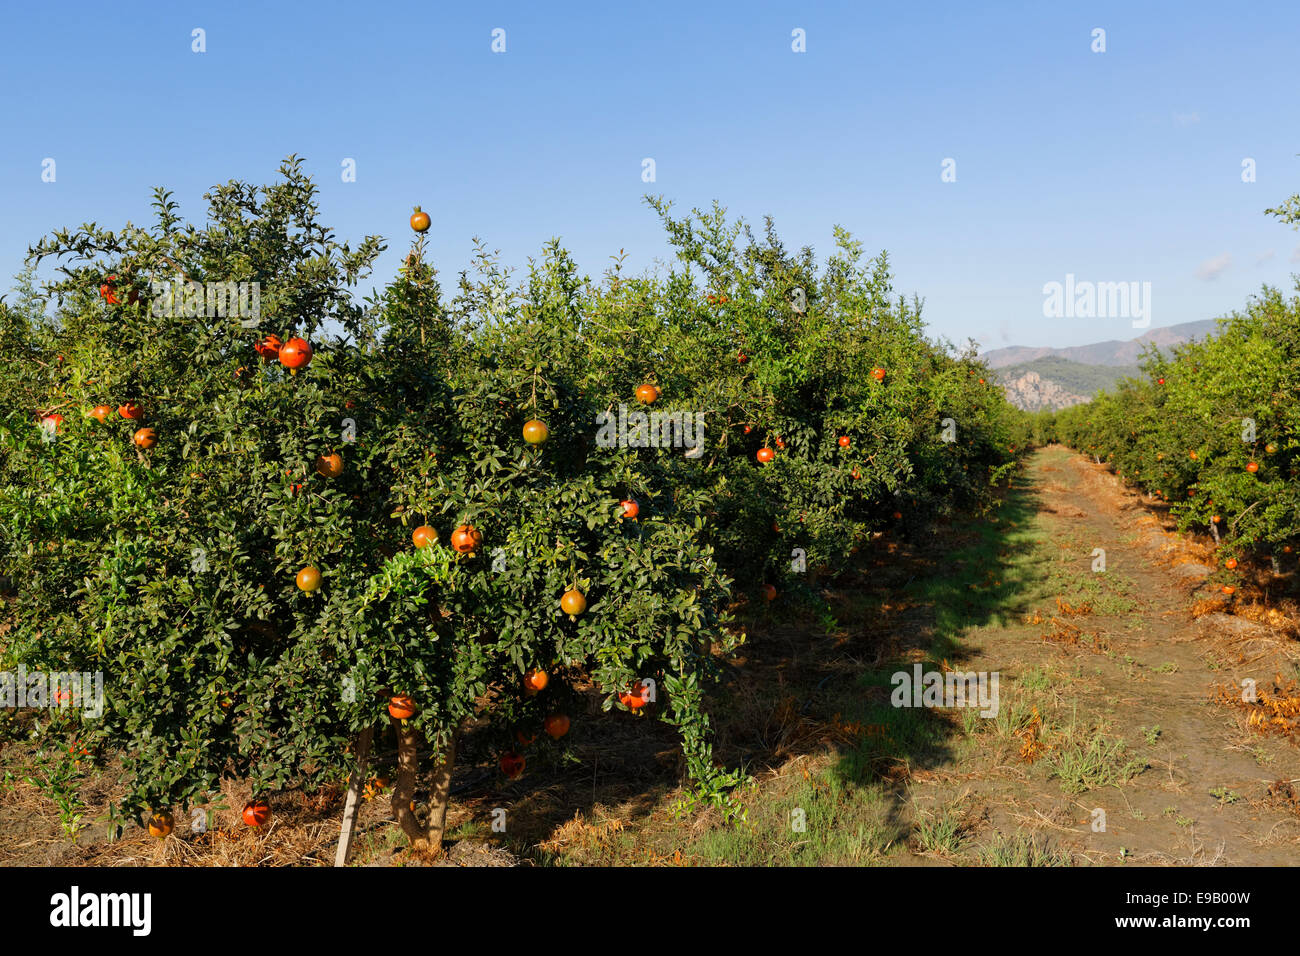 Plantation, Arbres de Grenade (Punica granatum), Dalyan, Turquie Banque D'Images